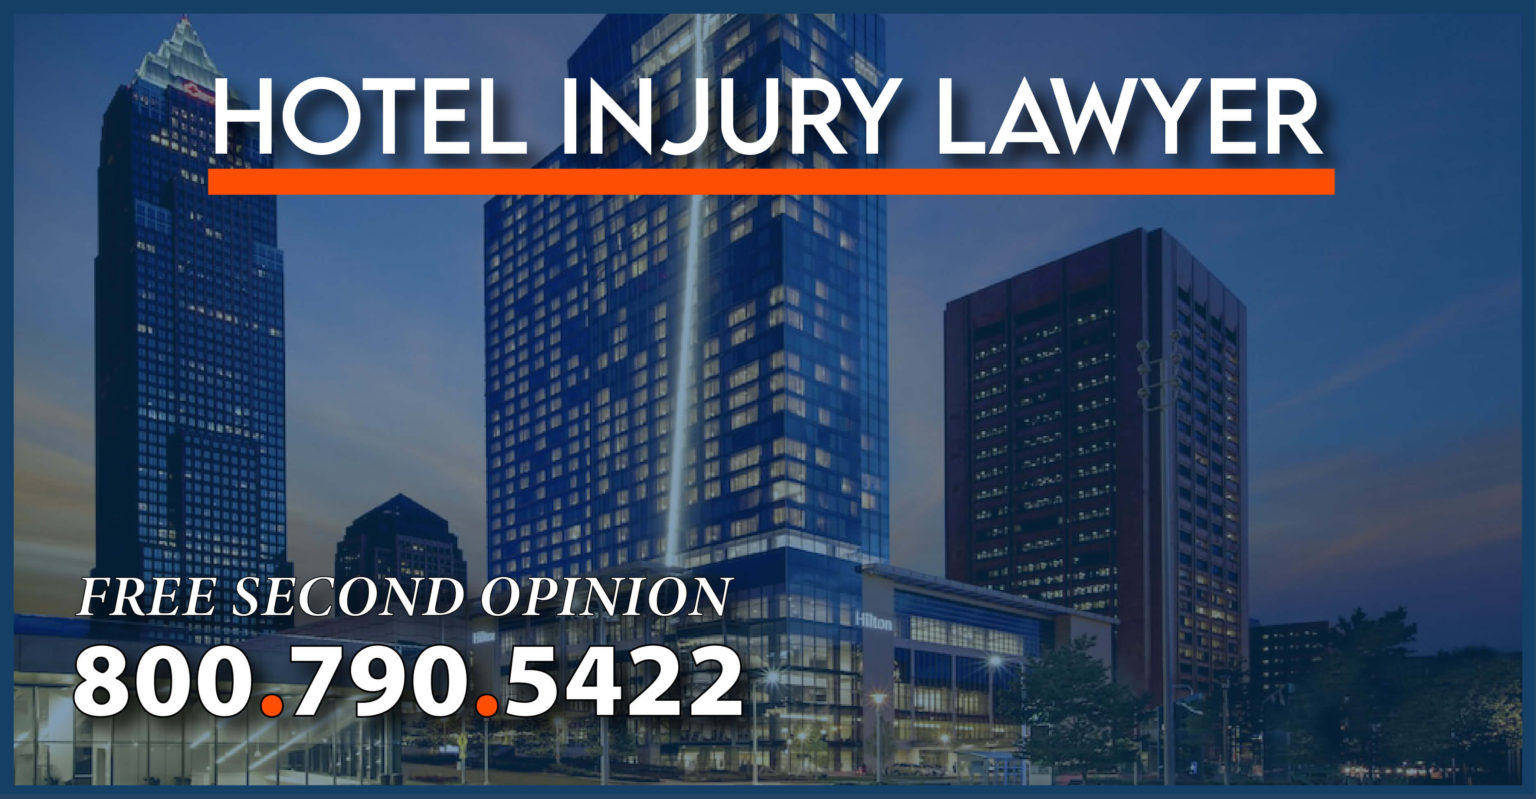 hotel motel injury lawyer accident attorney sue compensation 1536x799